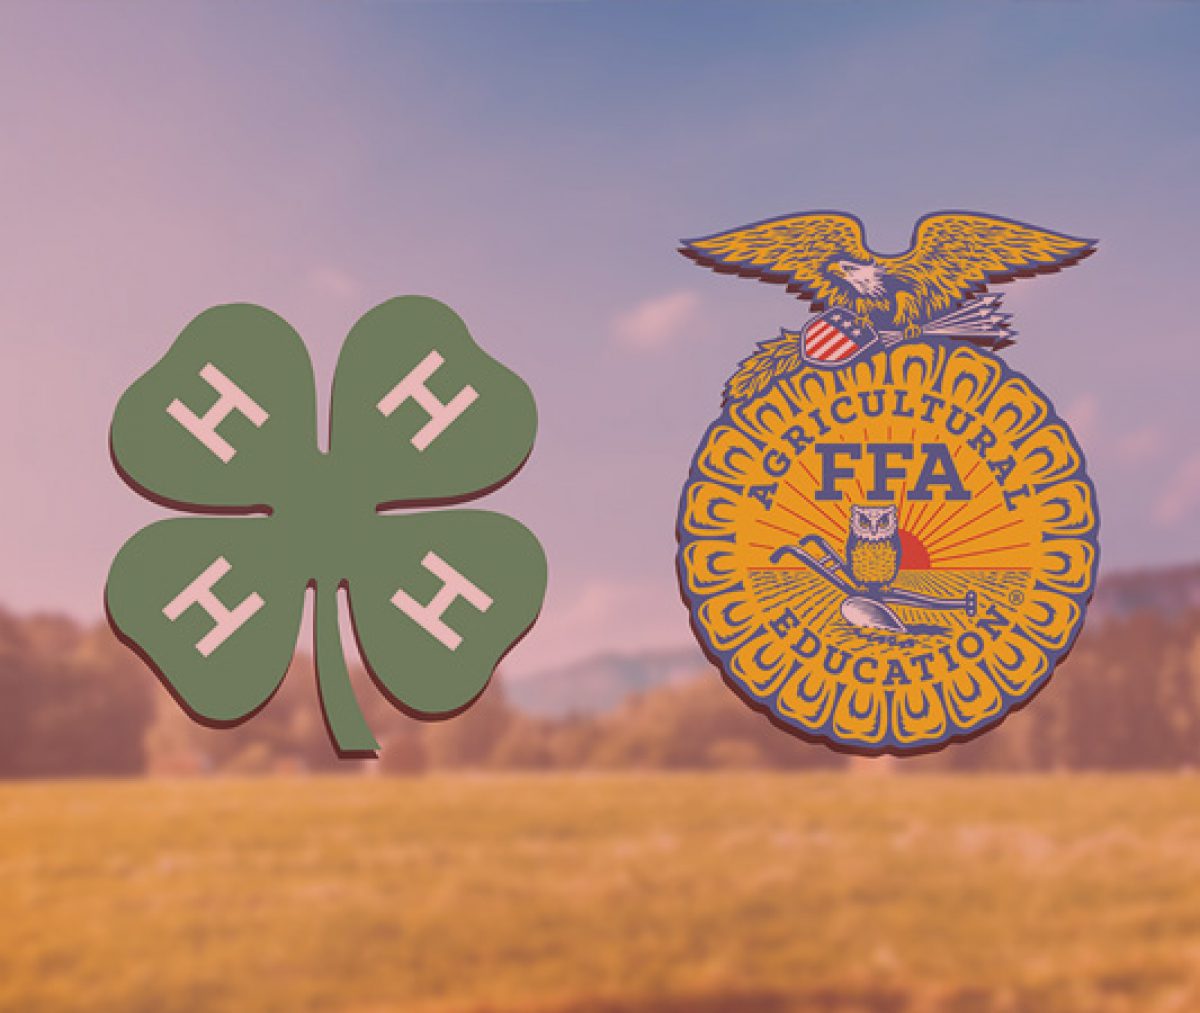 4-H and FFA logo